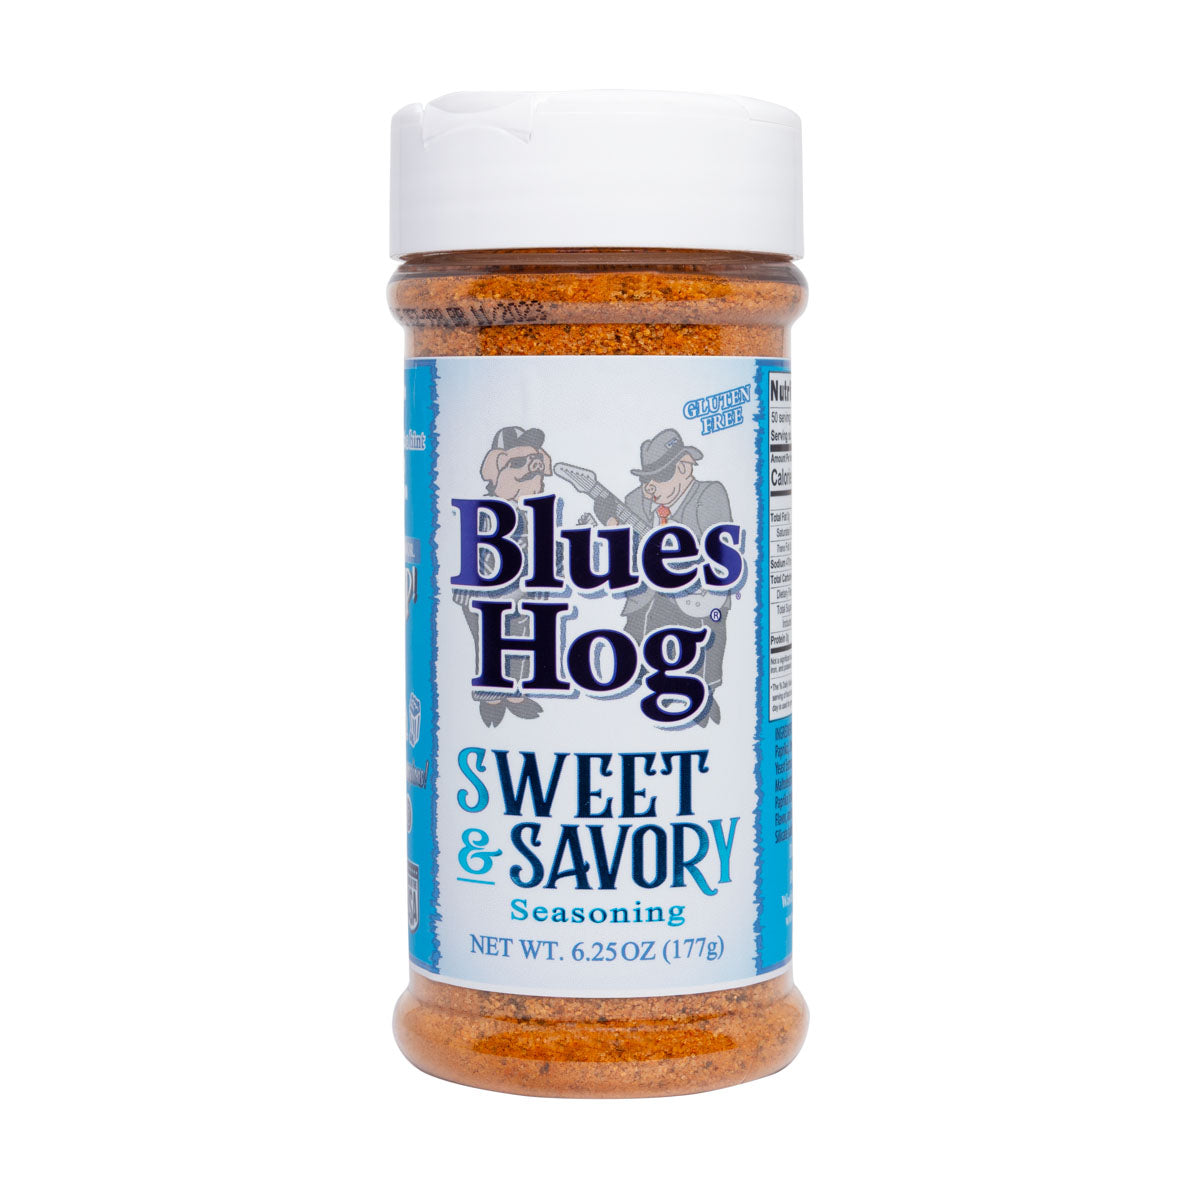 Sweet & Savory Seasoning - Blues Hog